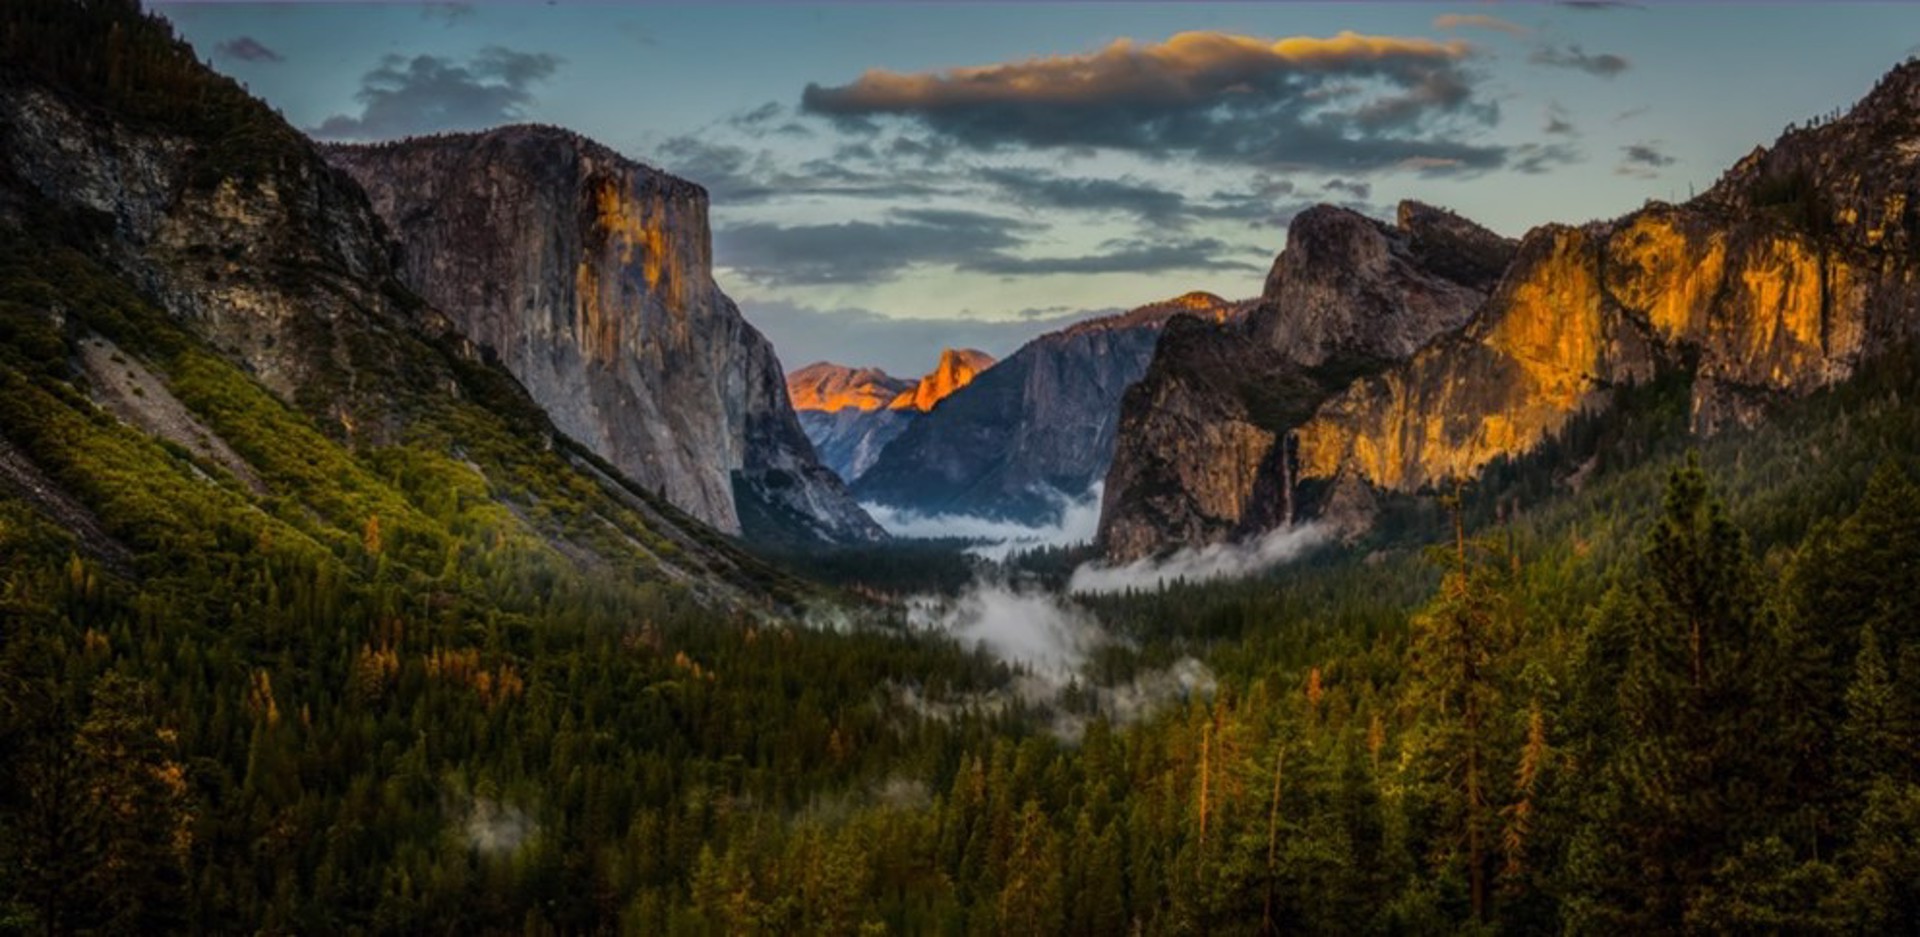 Inspiration Point, Yosemite by Arnold Abelman